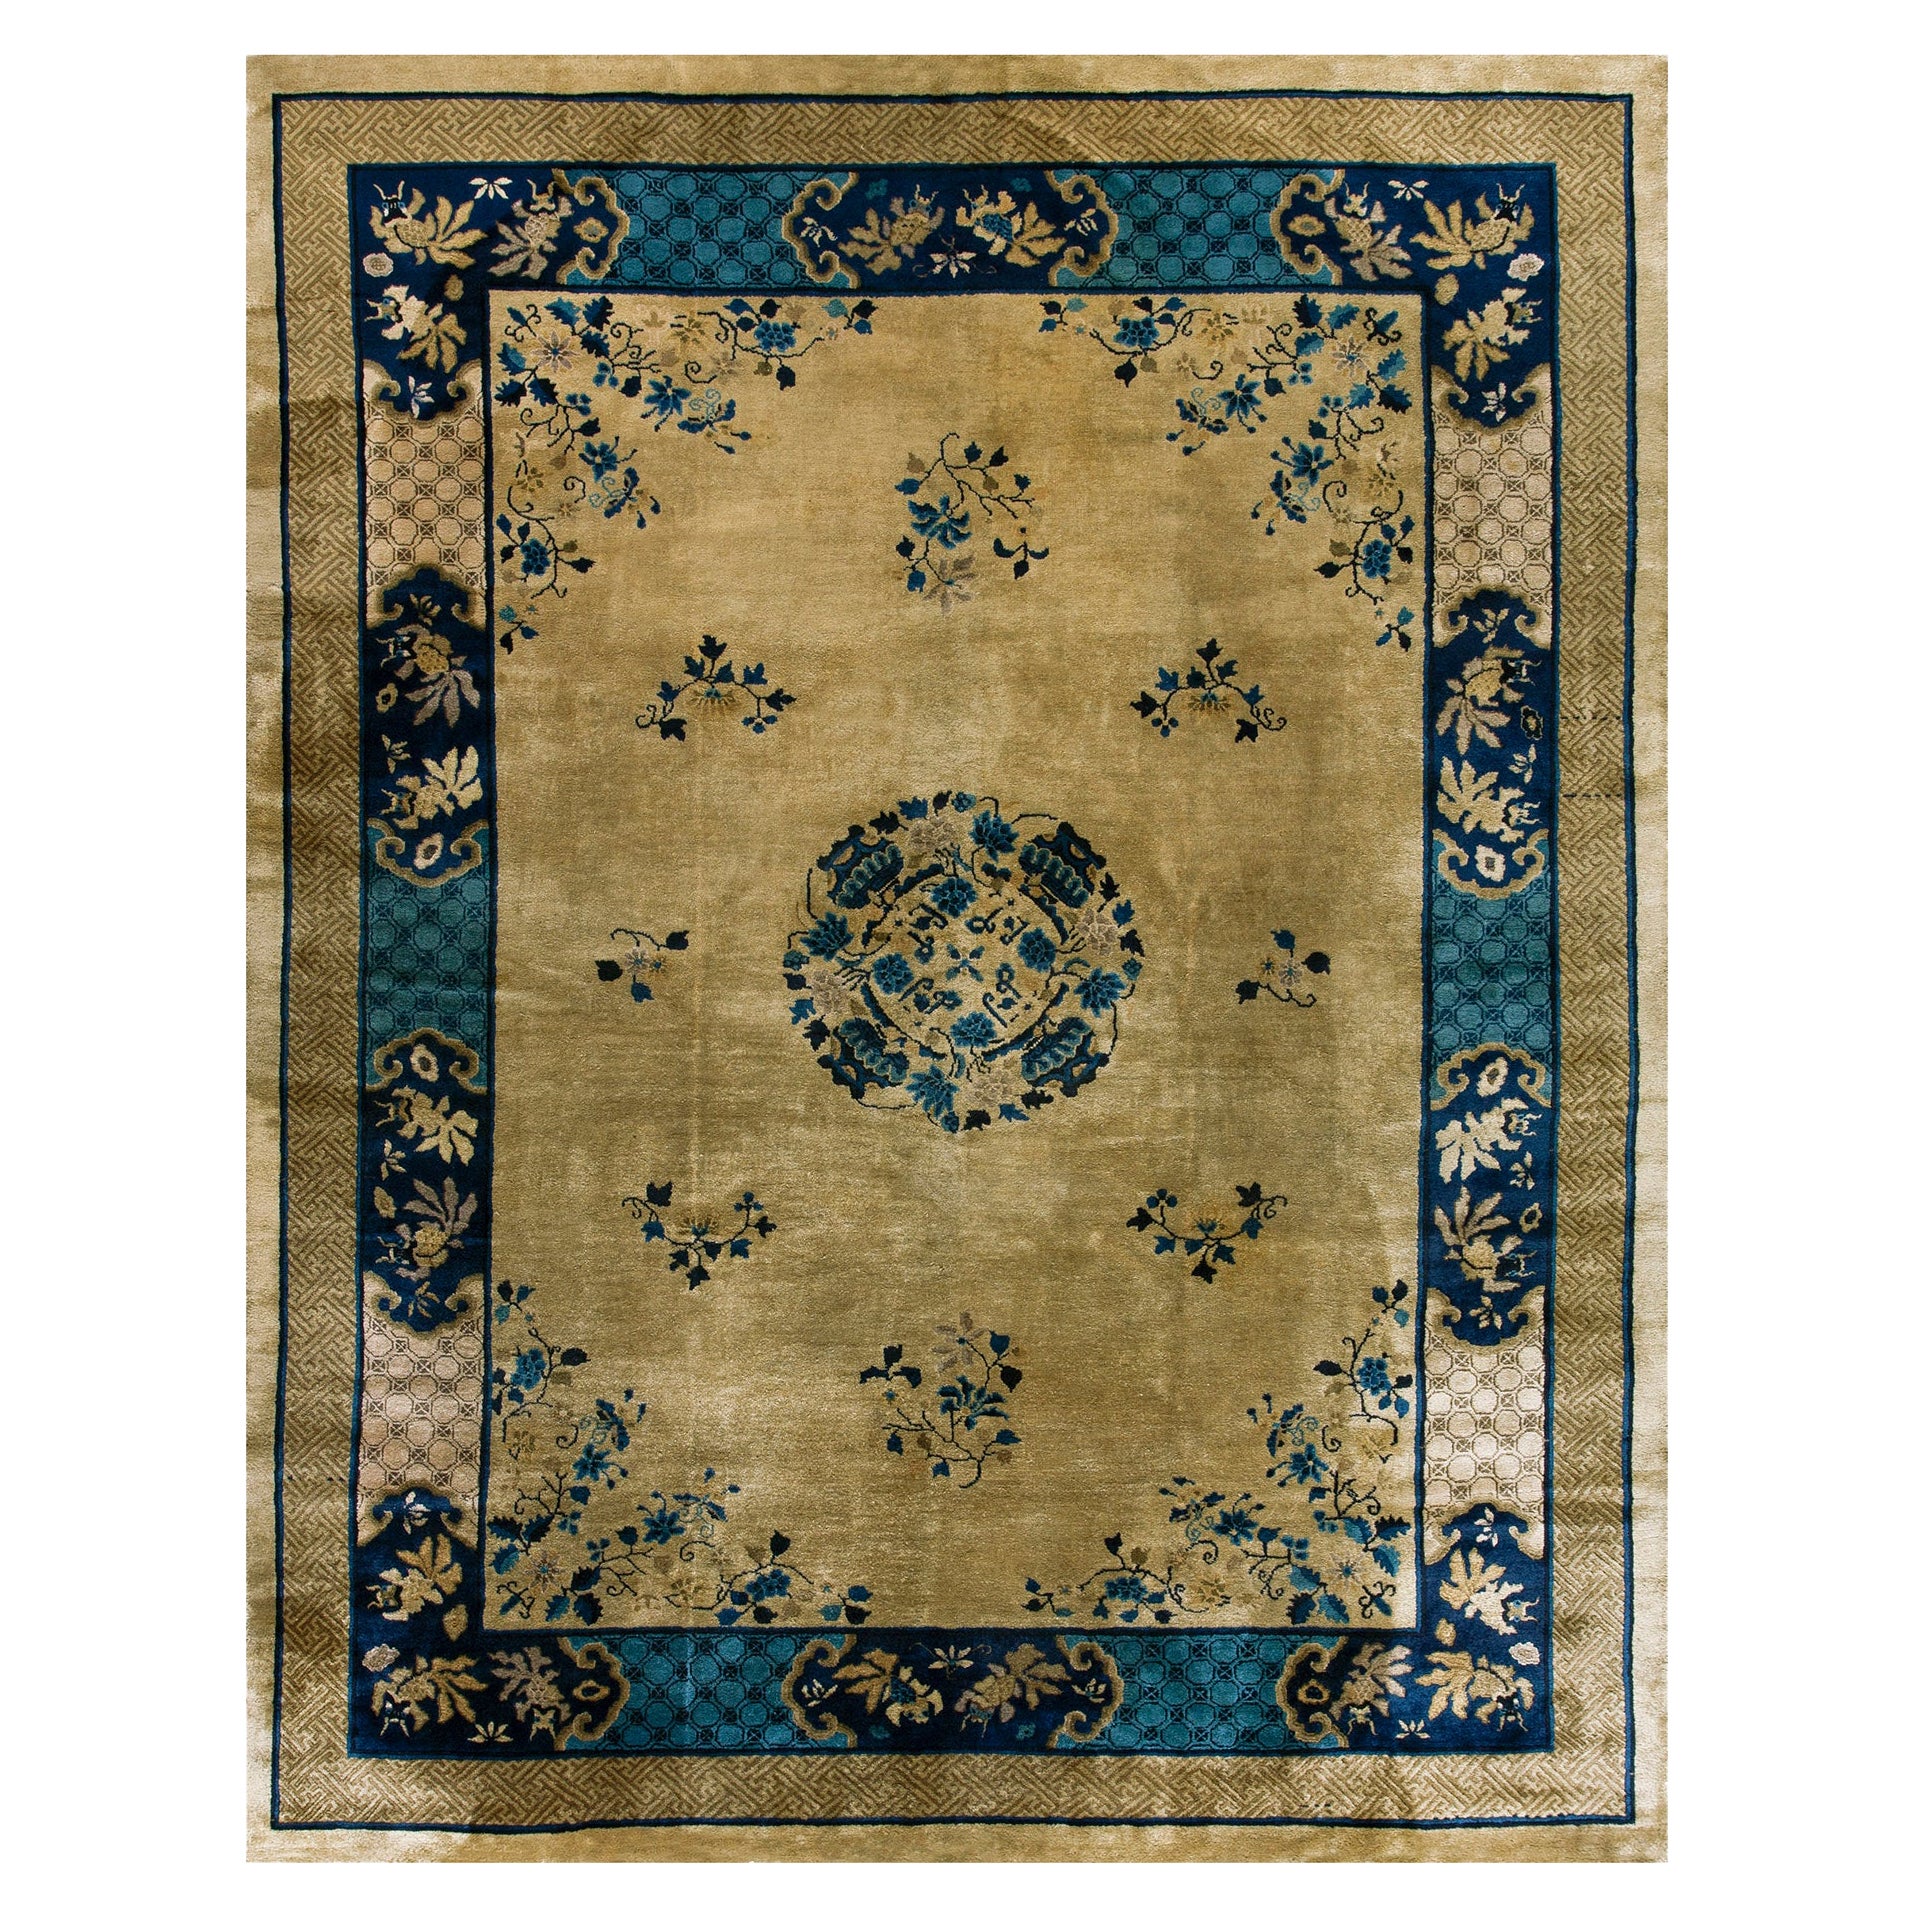 Early 20th Century Chinese Peking Carpet ( 8'10'' x 11'5'' - 270 x 348 )